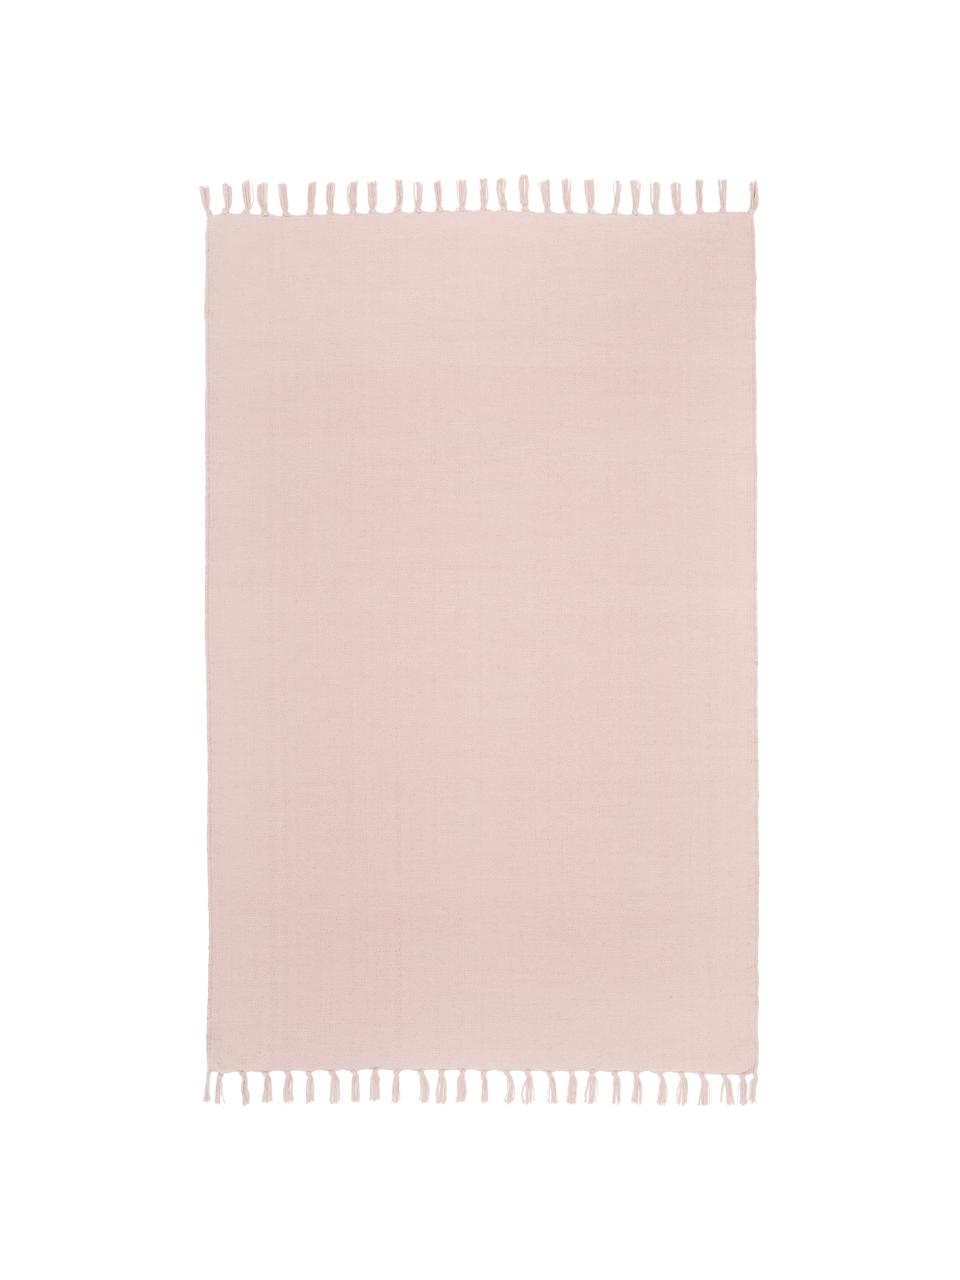 Dun  katoenen vloerkleed Agneta in roze, handgeweven, 100% katoen, Roze, B 200 x L 300 cm (maat L)